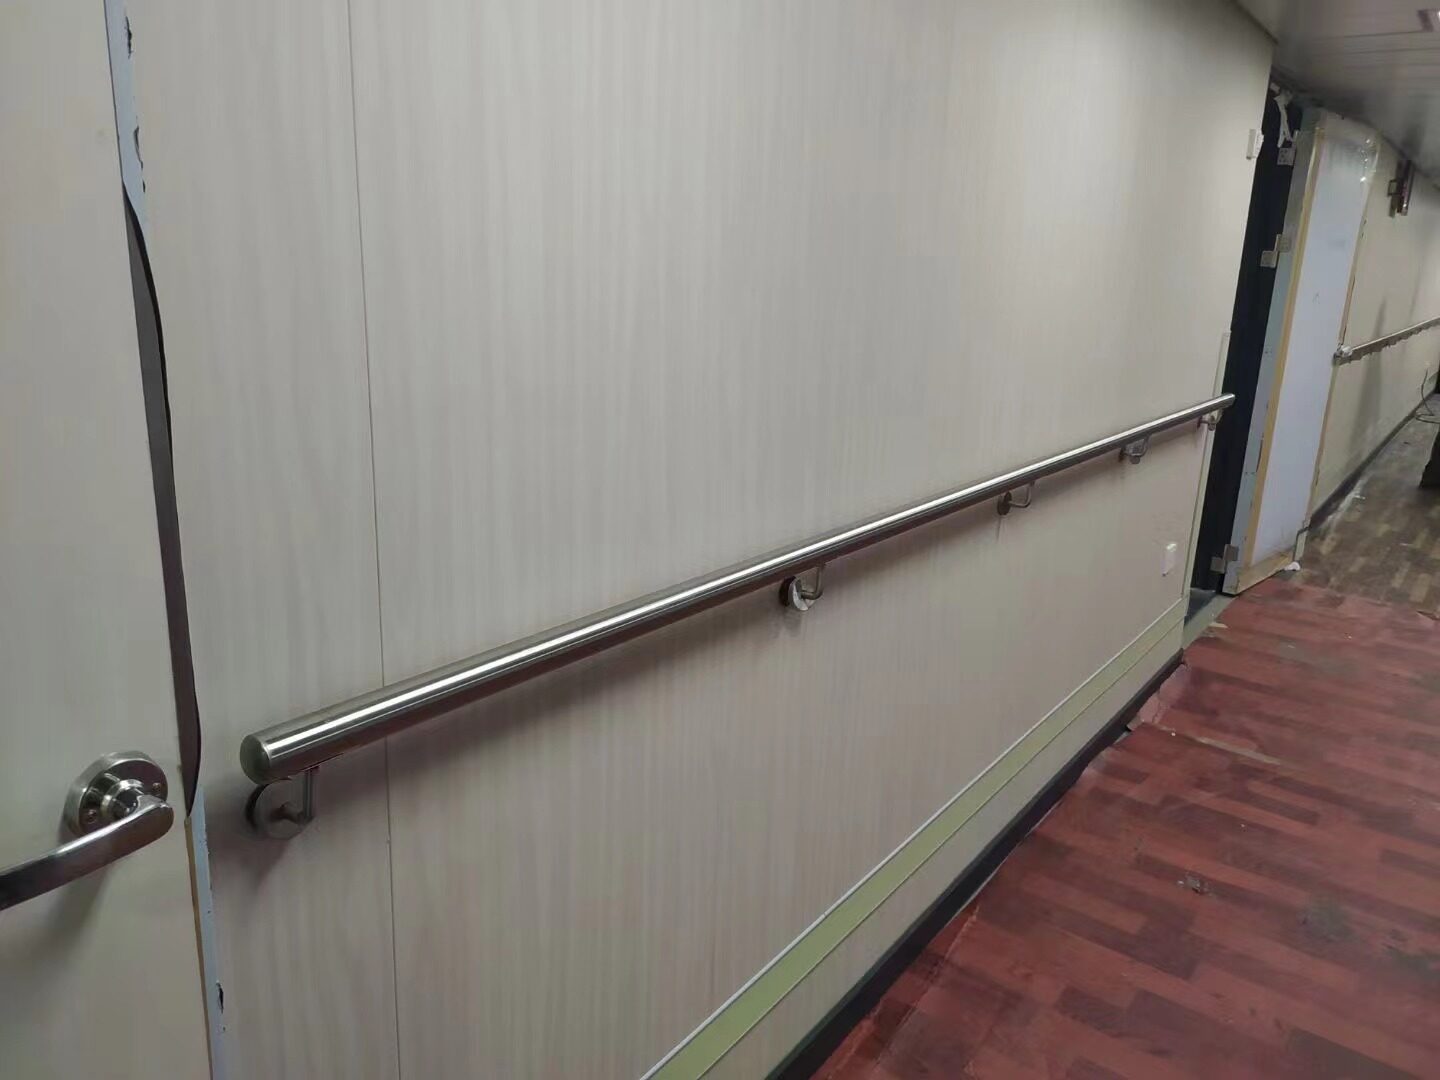 wall mounted handrail kit, stainless steel handrail kit